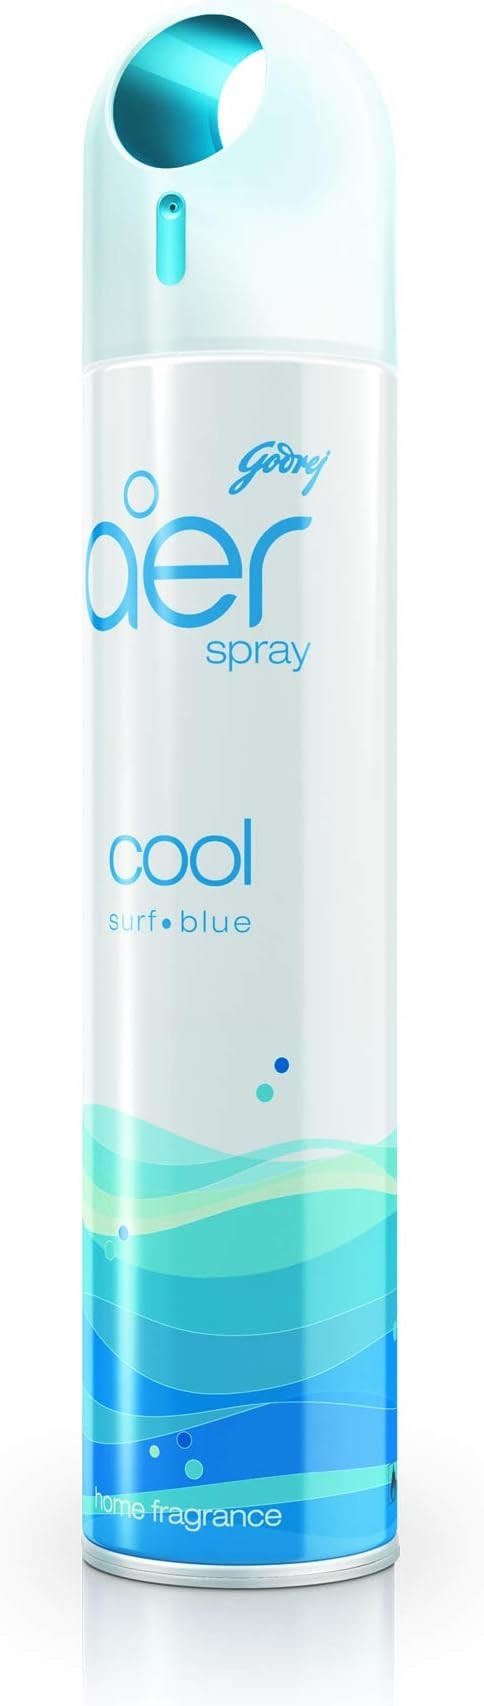 Godrej aer Home Air Freshener Spray - 220ml Cool Surf Blue